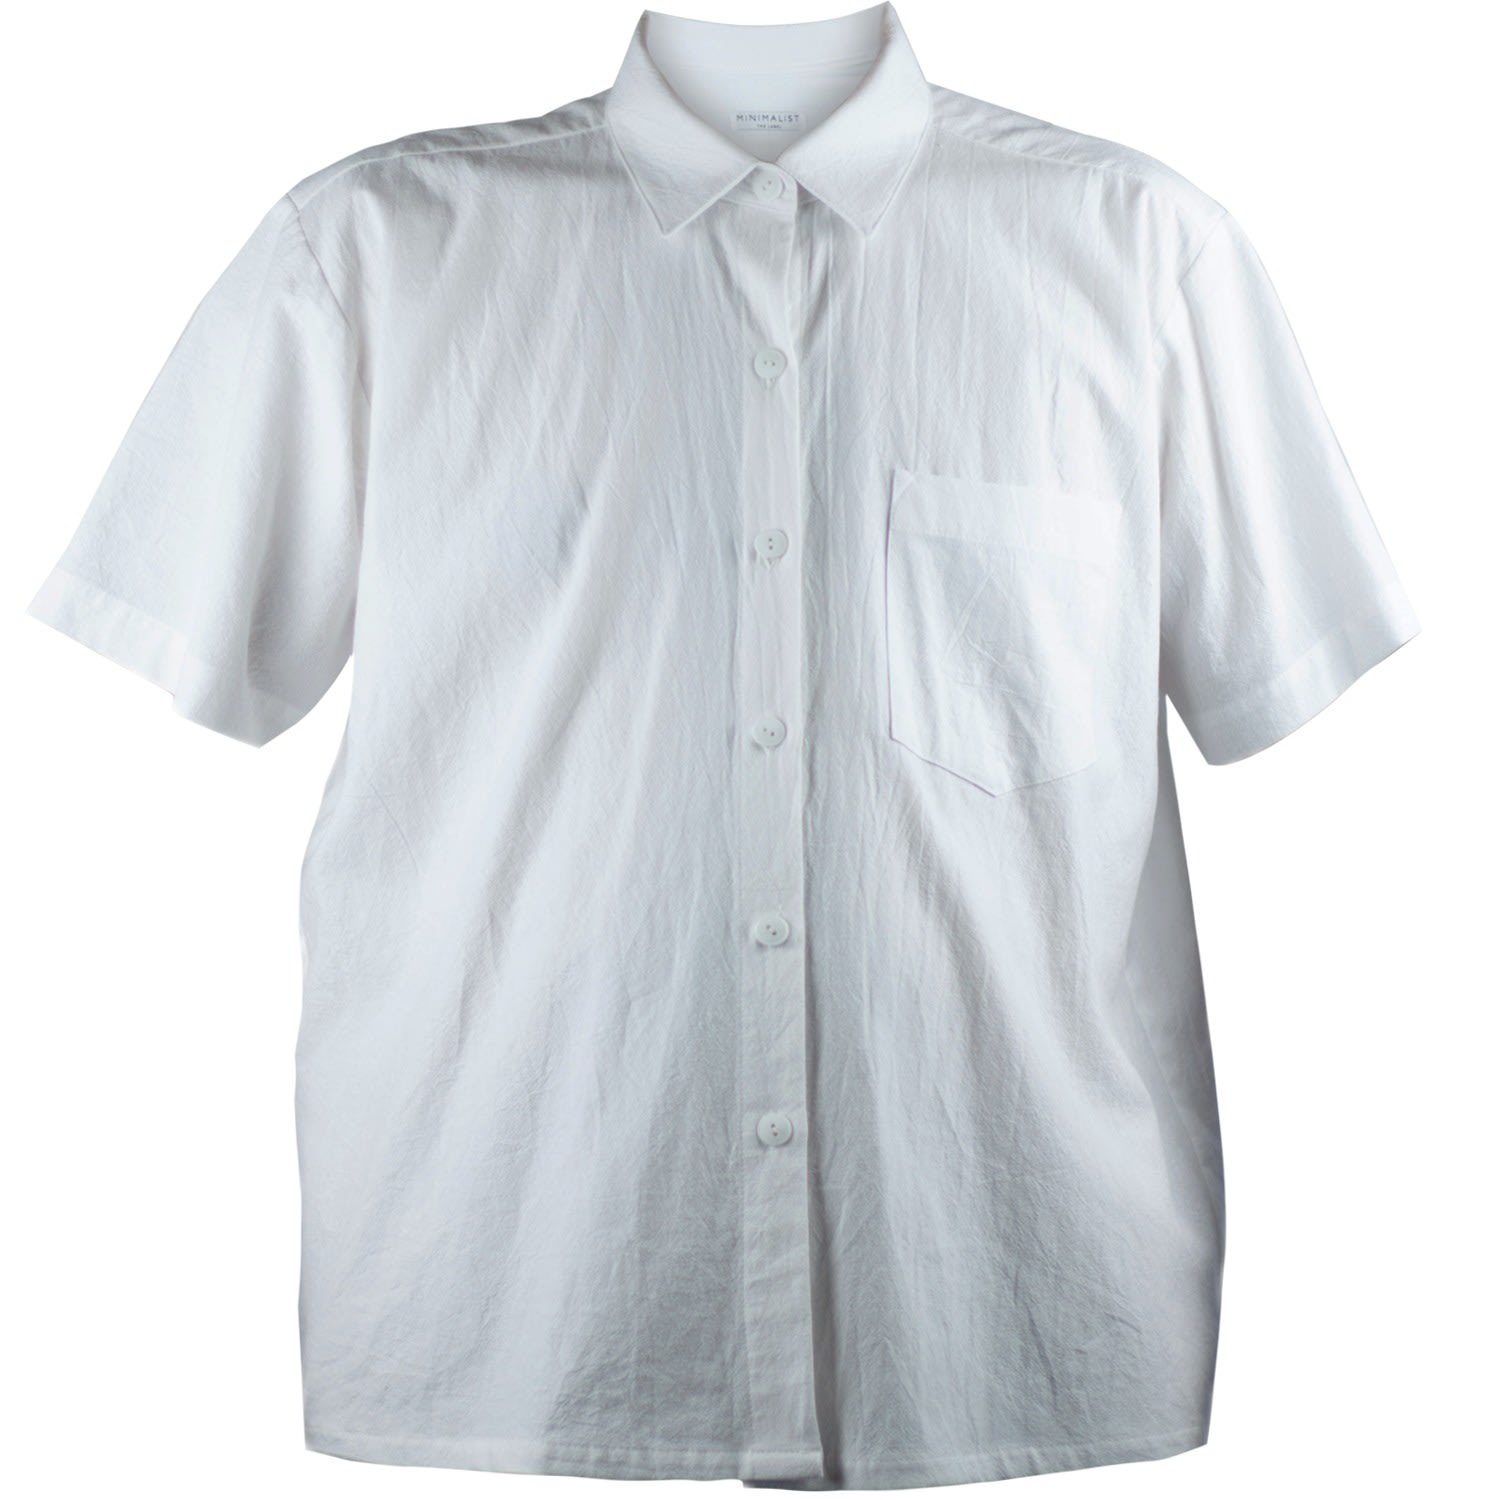 Men’s Dom Shirt White Small Minimalist the Label